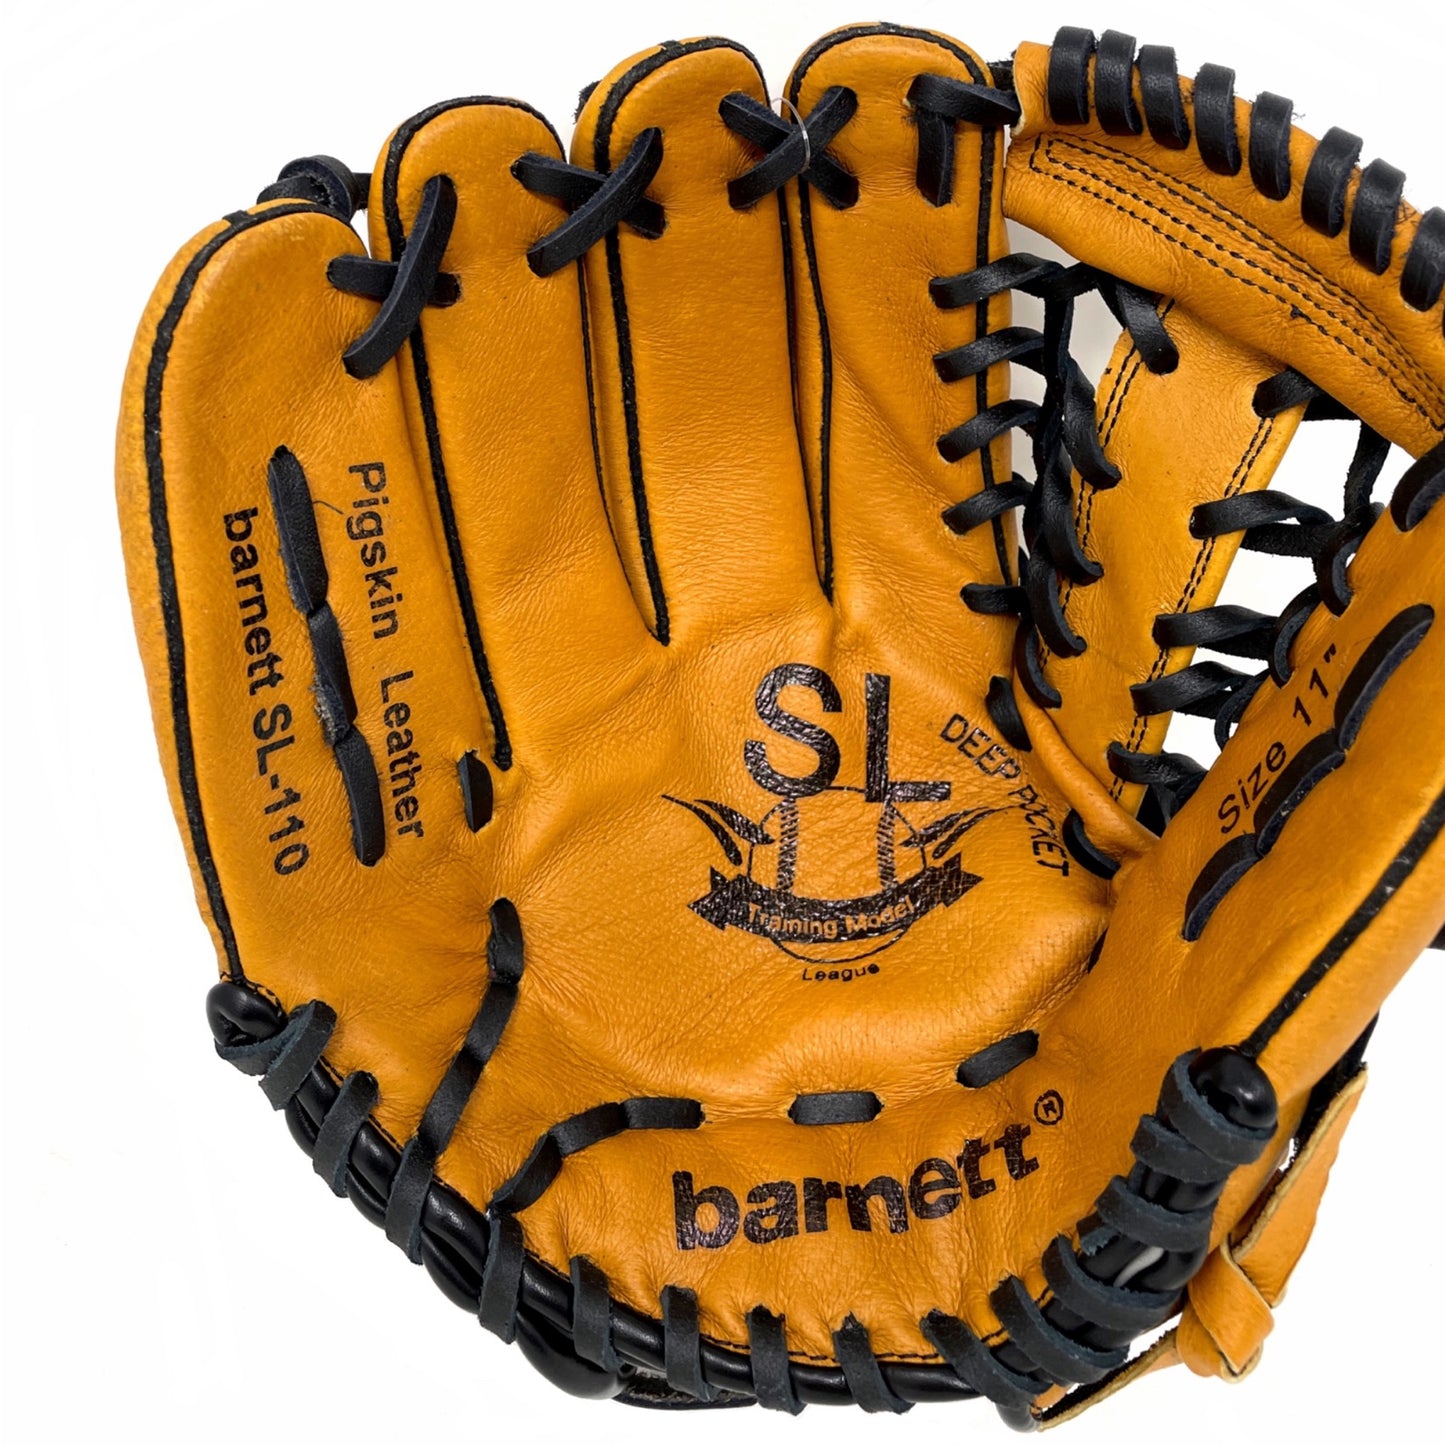 SL-110 Baseball Handschuh, Schweinsleder, infield/outfield, Größe 11 (inch)